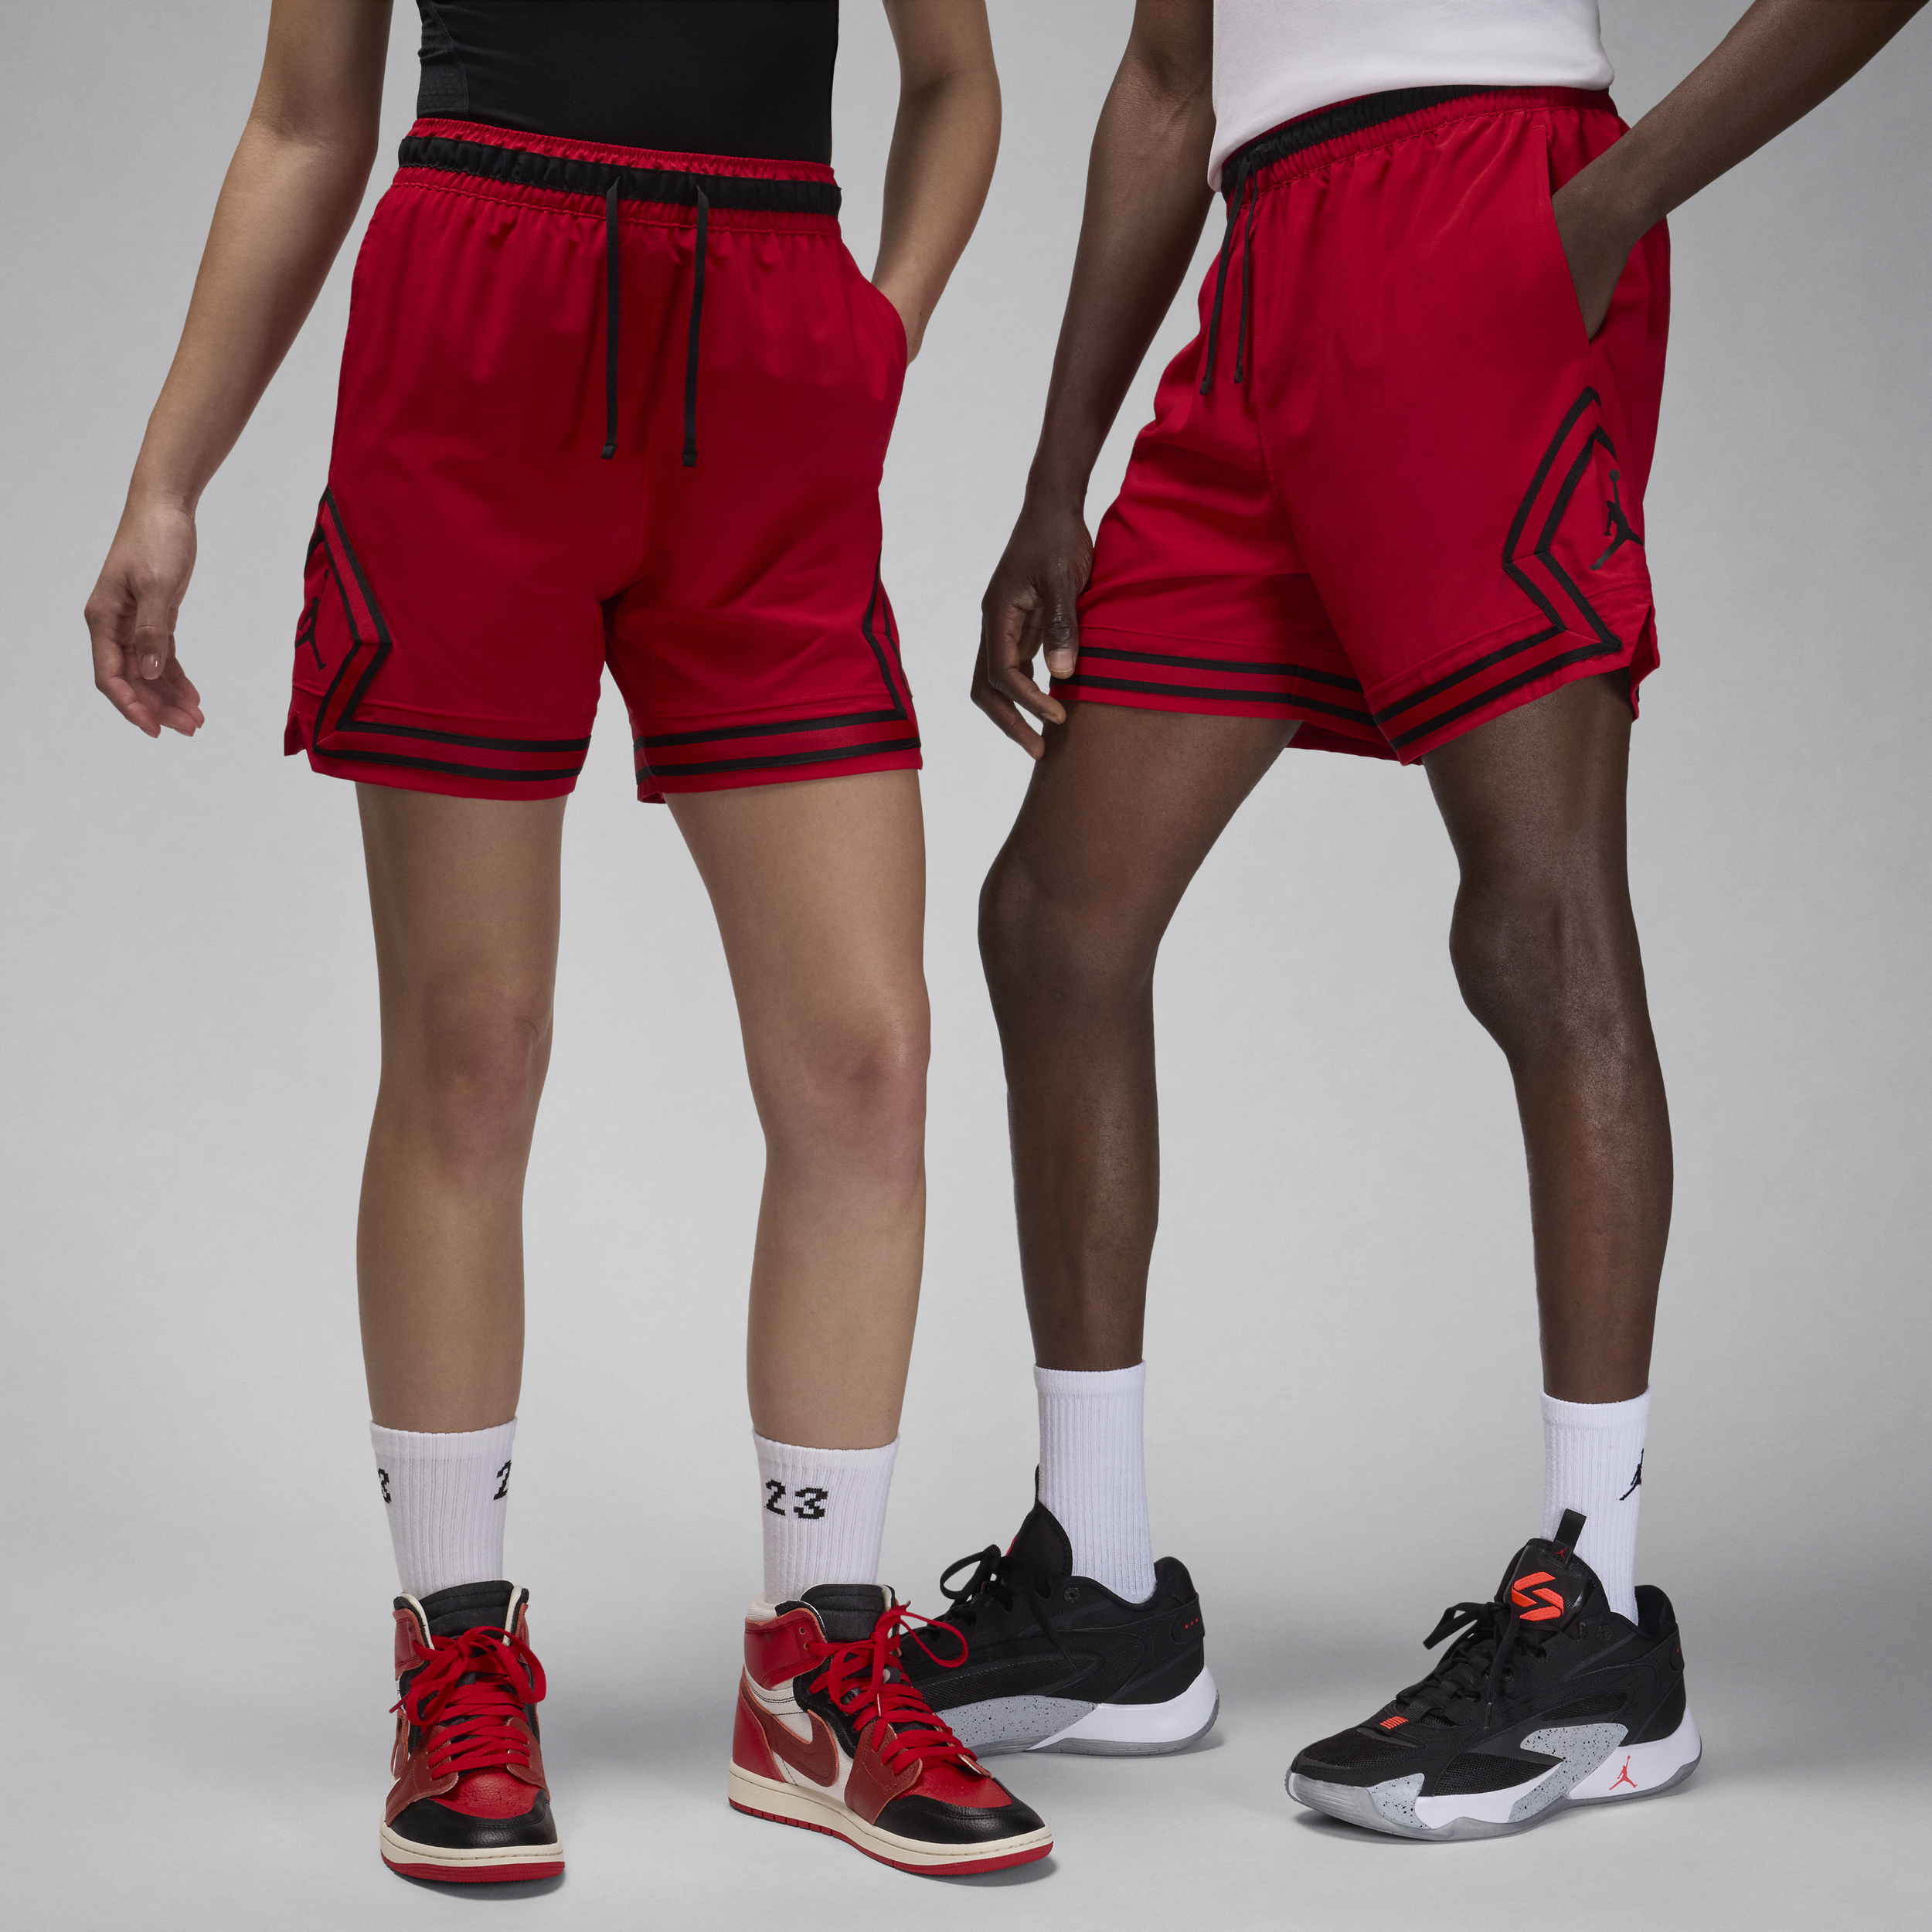 Nike Shorts Diamond in tessuto Dri-FIT Jordan Sport – Uomo - Rosso